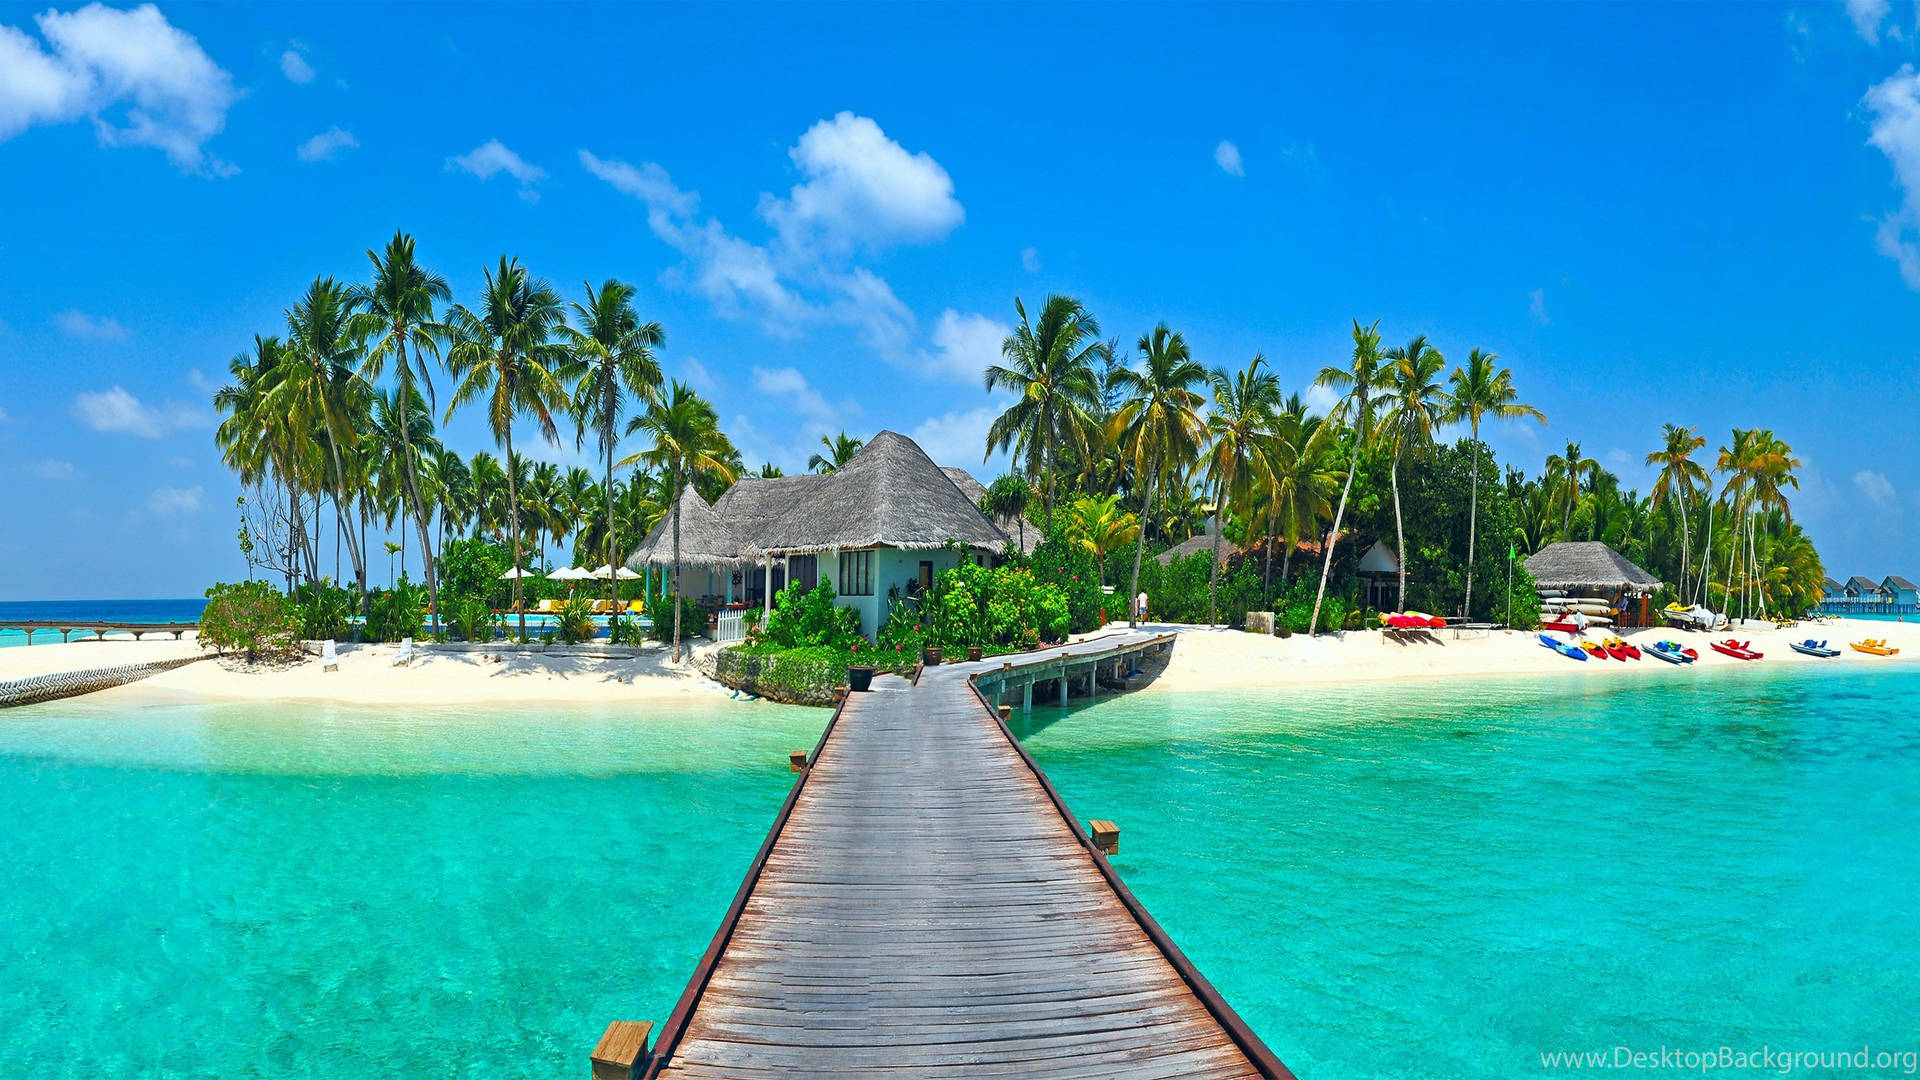 Maldives Beach Scenes Desktop Wallpaper